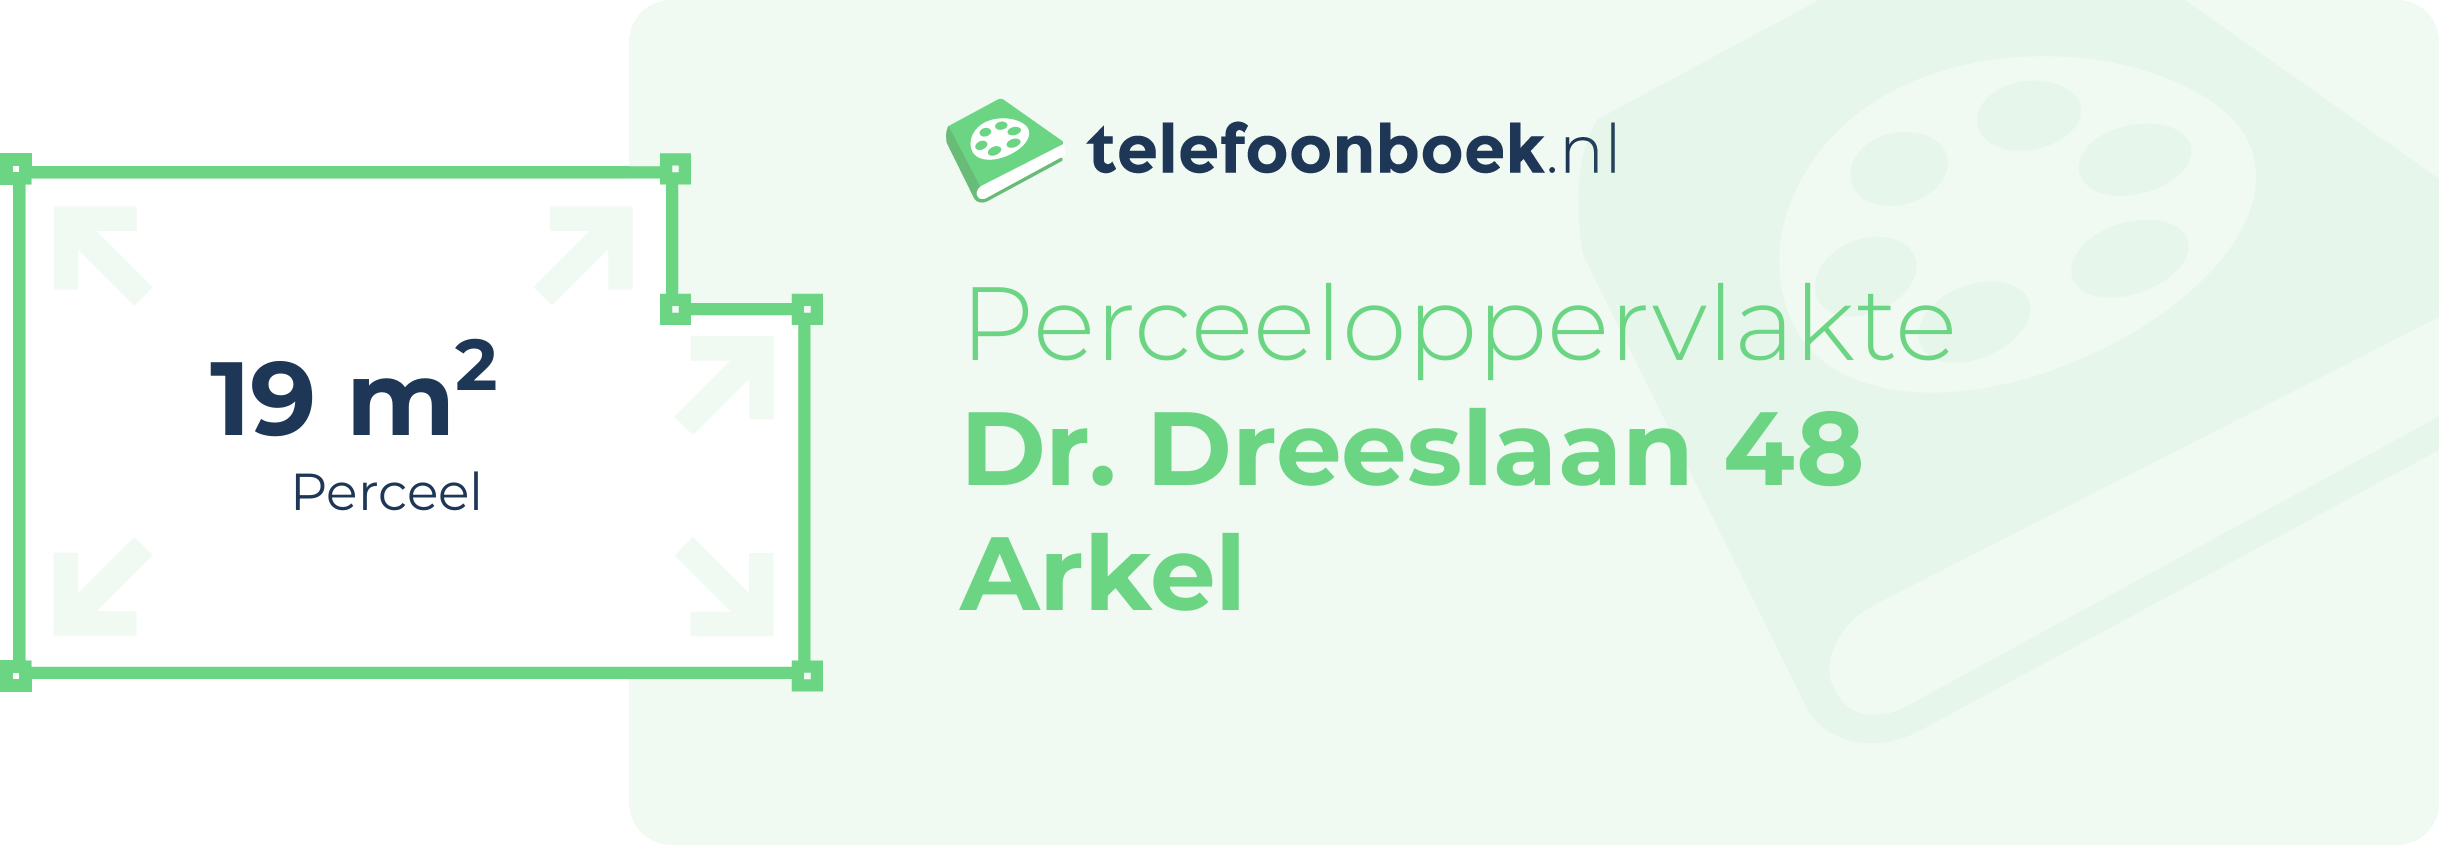 Perceeloppervlakte Dr. Dreeslaan 48 Arkel